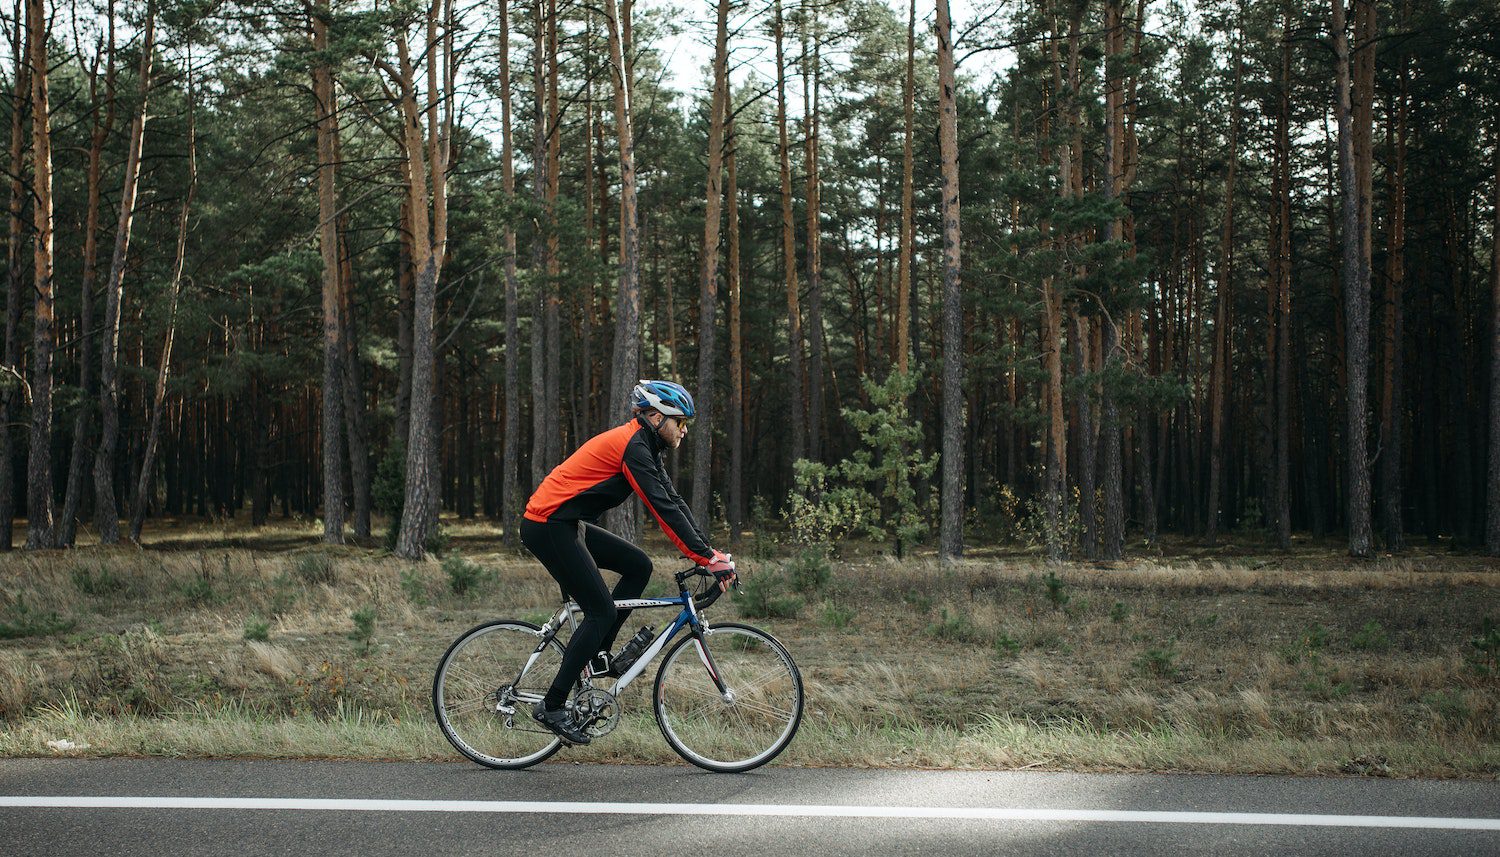 Man riding Black Bicycle on Roadside